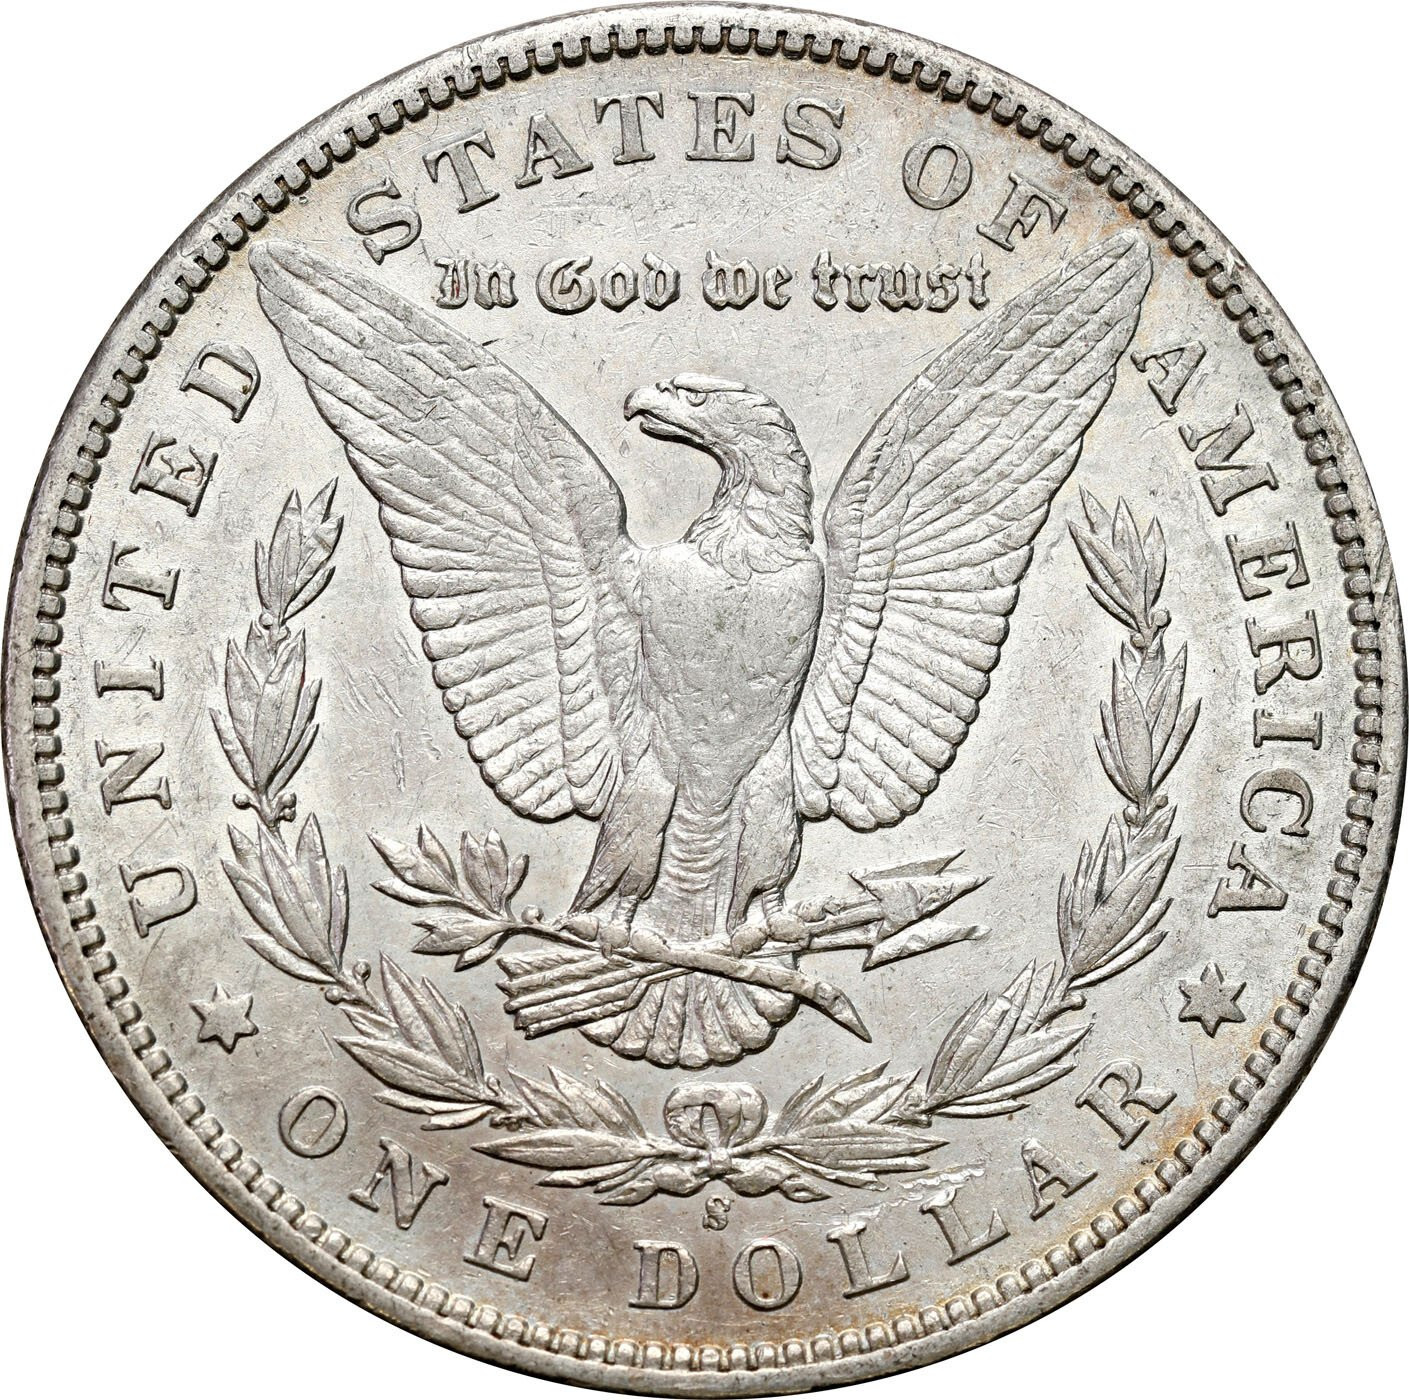 USA. Dolar 1899 S, San Francisco 